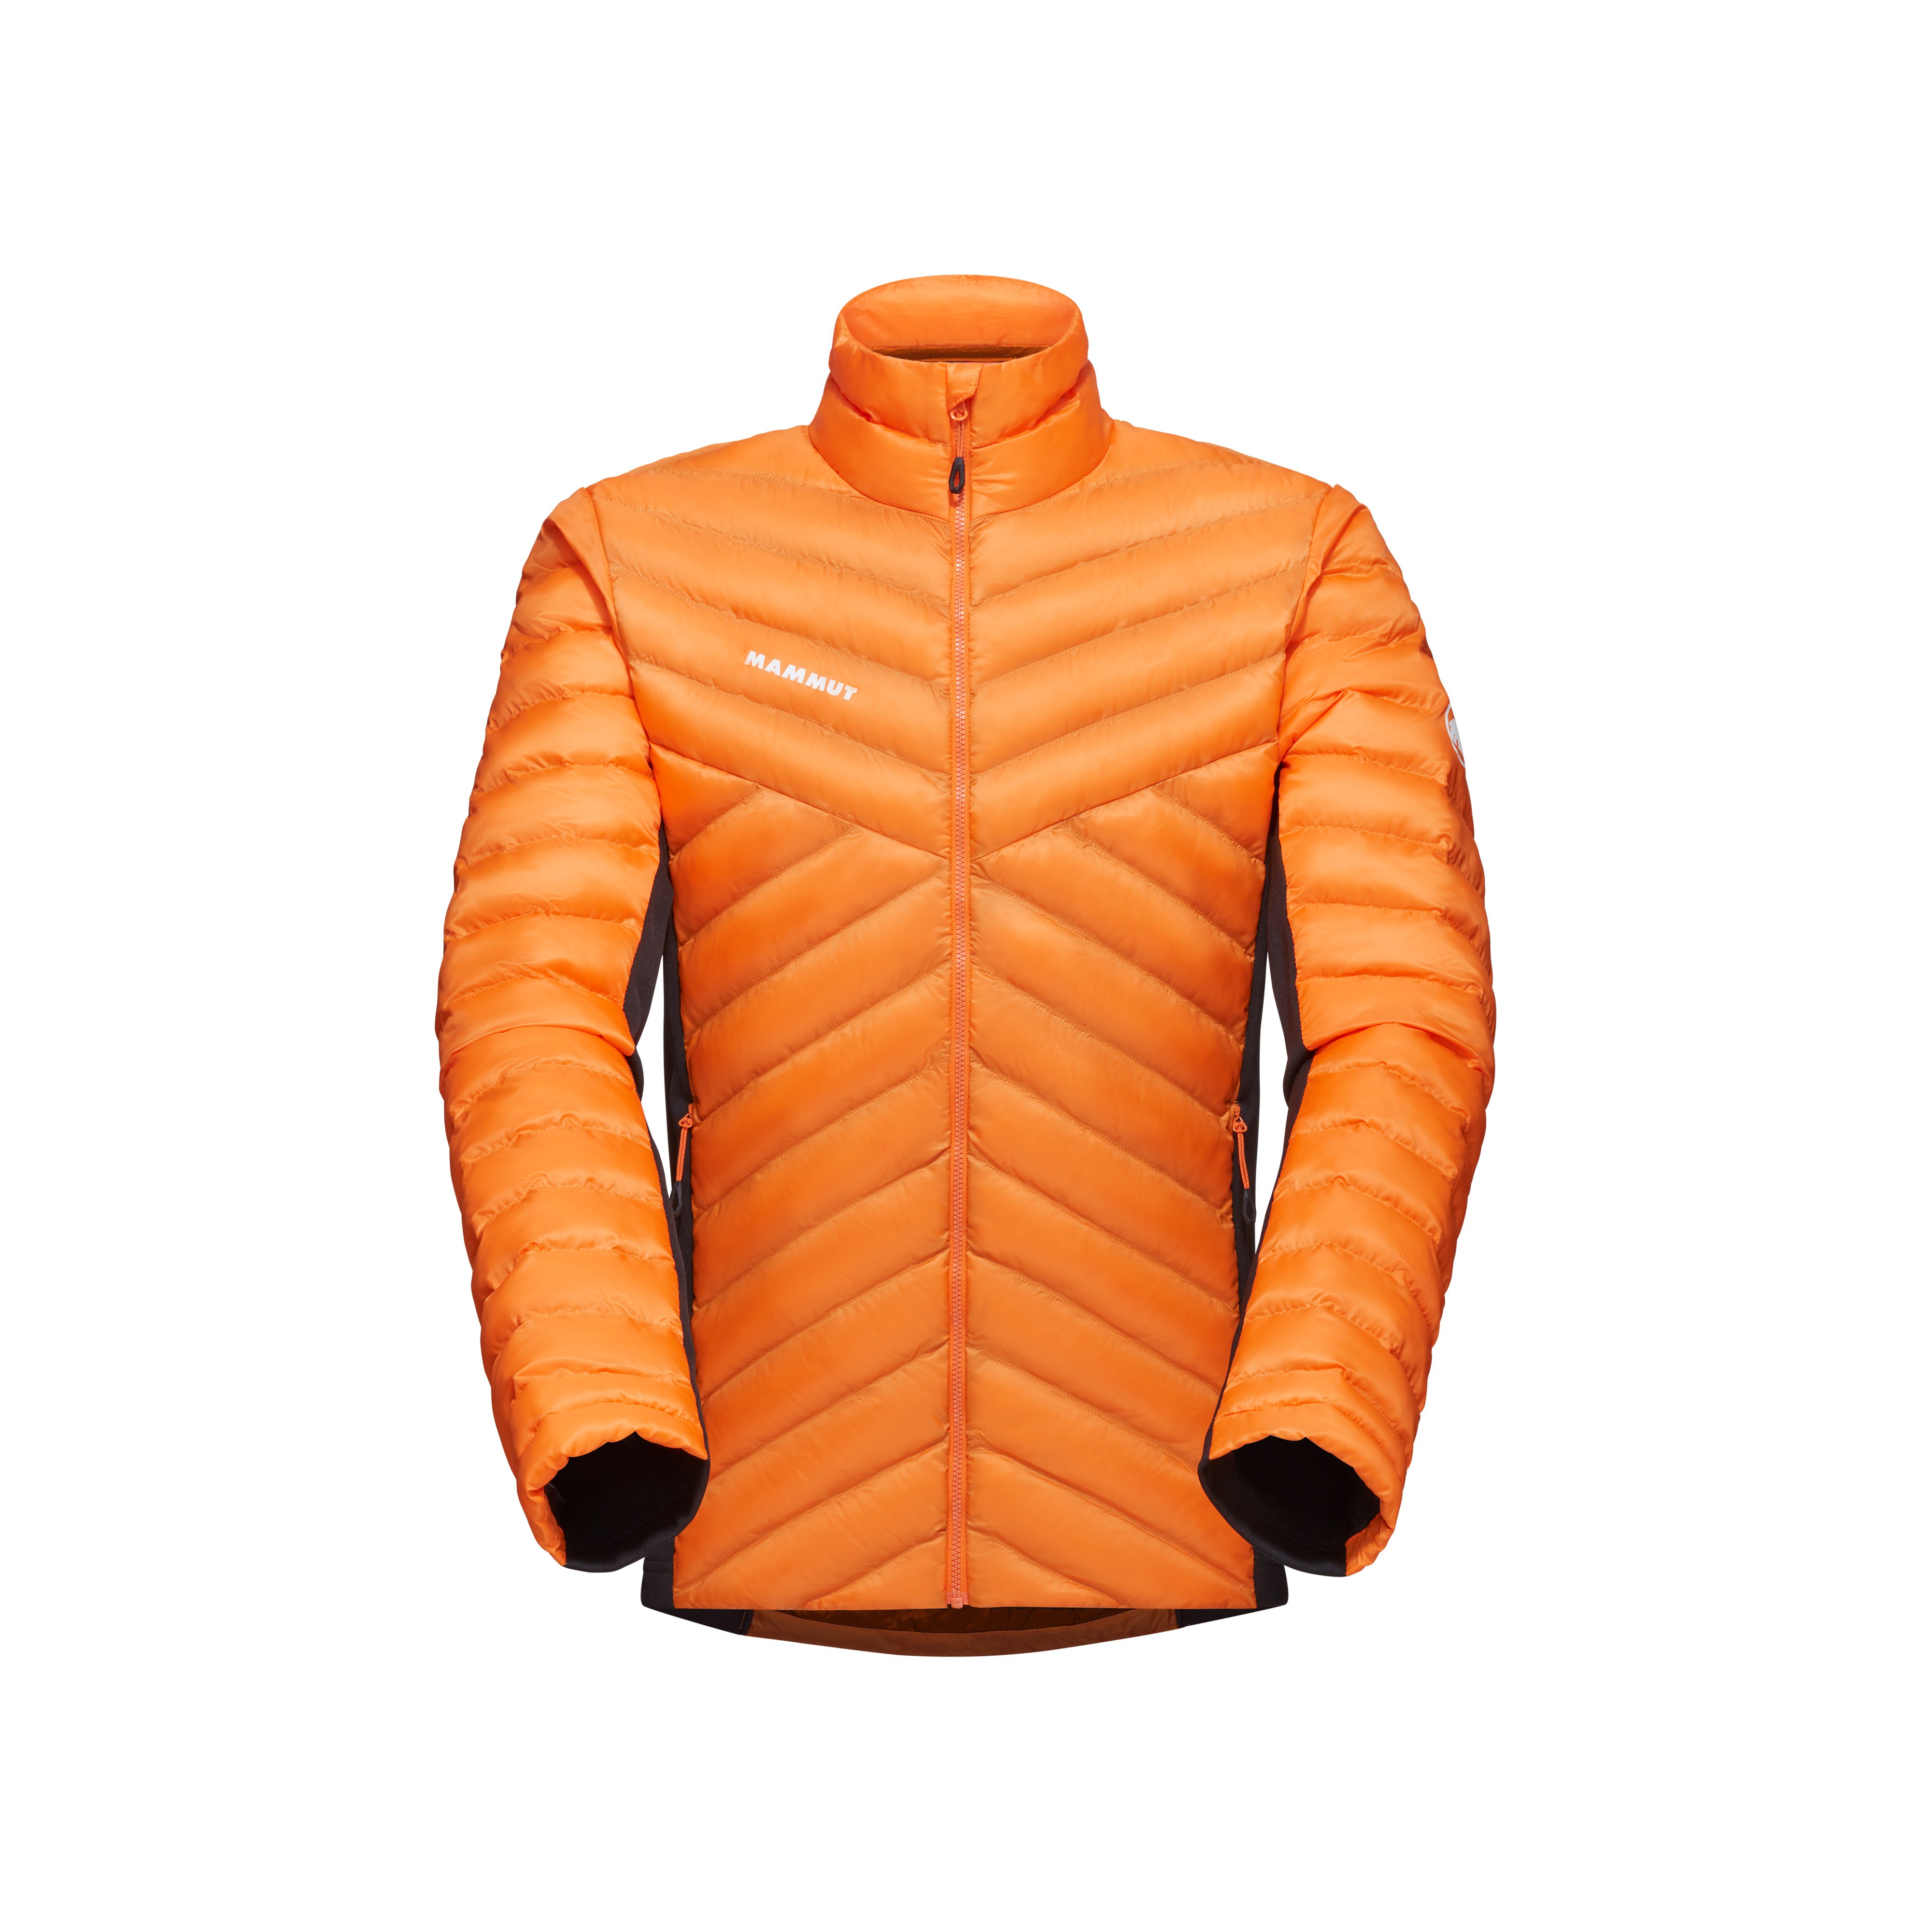 Albula IN Hybrid Jacket Men - tangerine-black, L product image